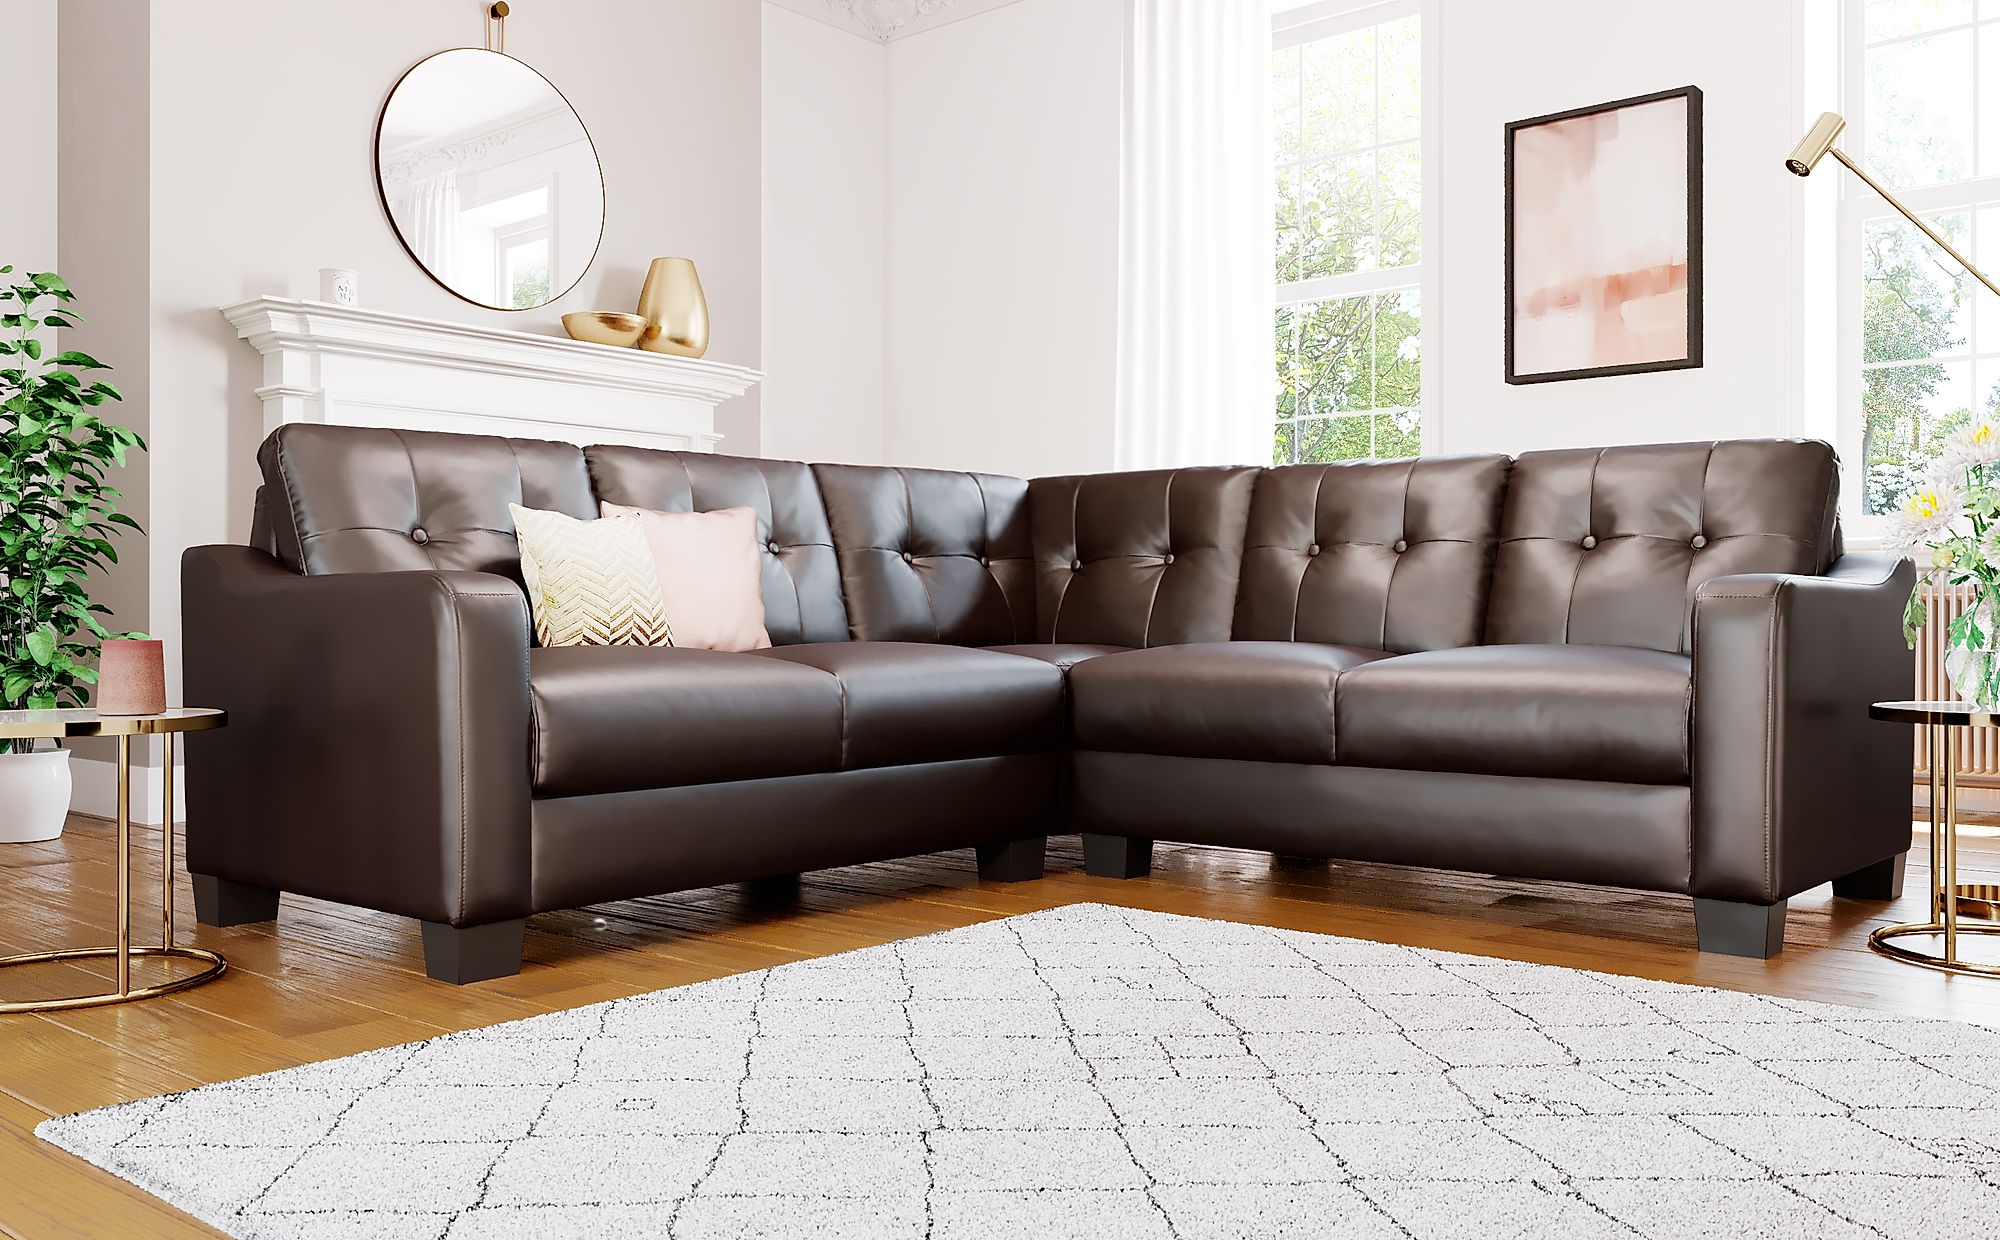 firm leather corner sofa